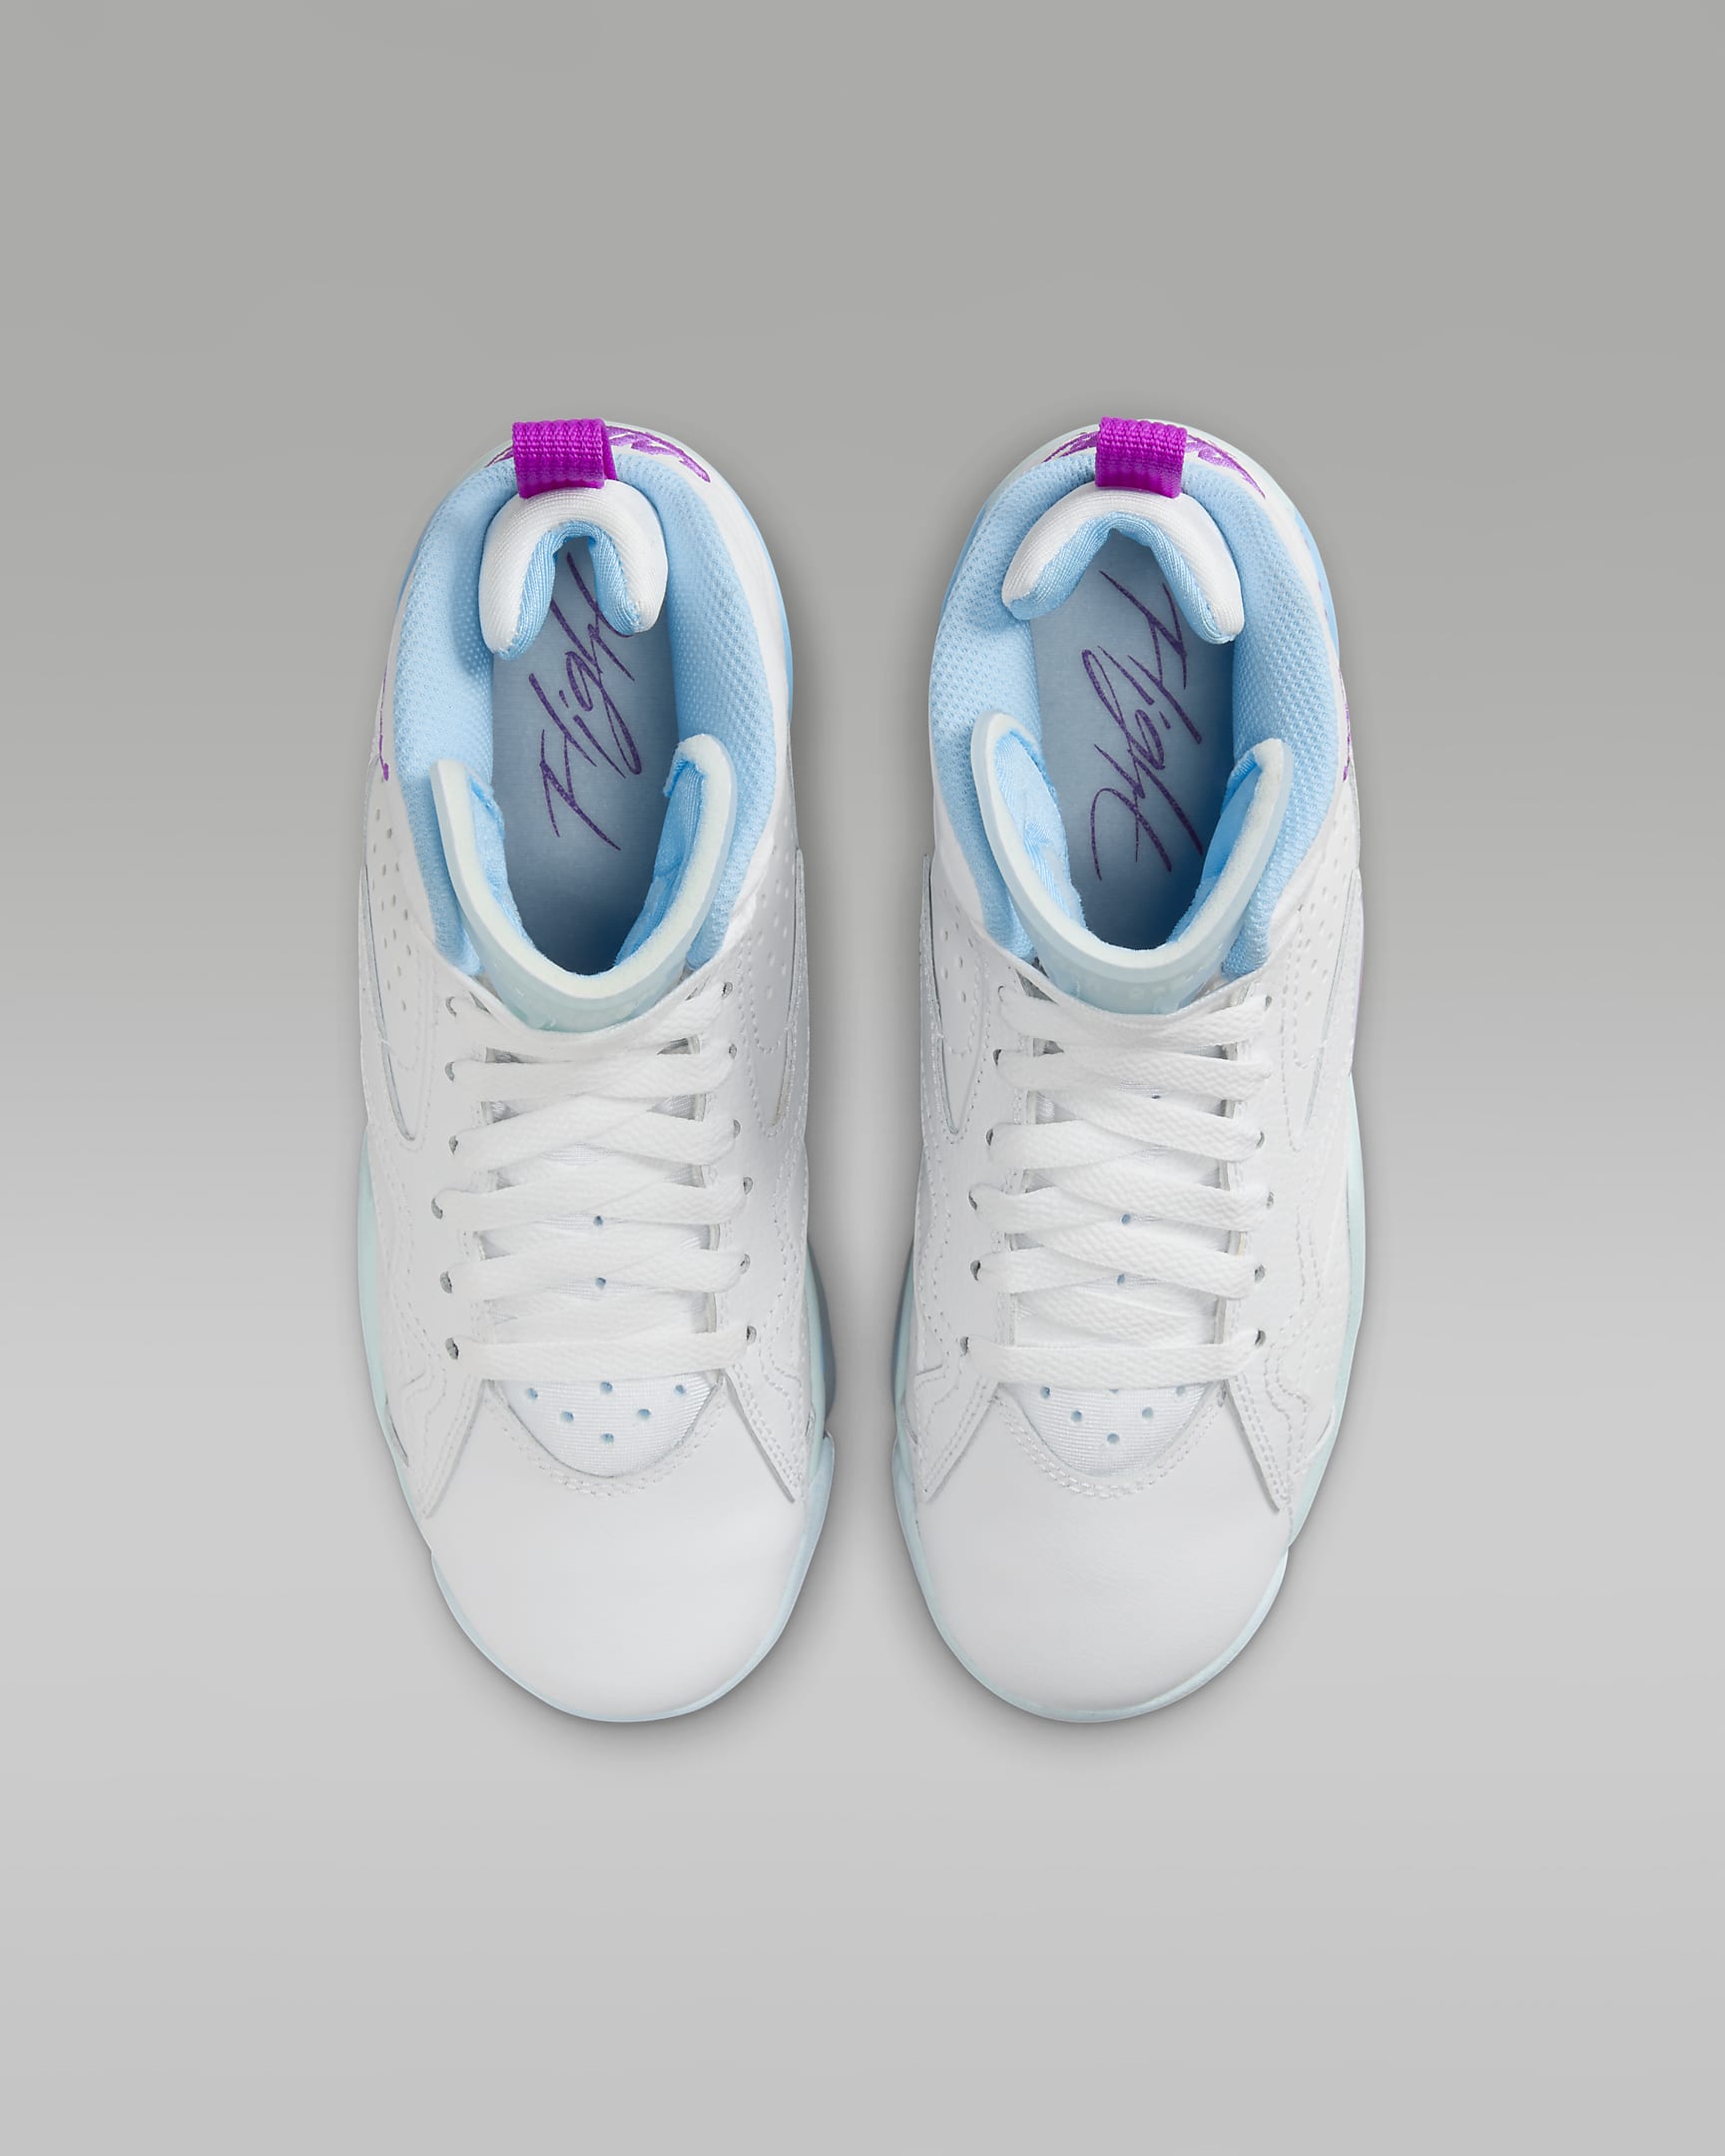 Jumpman MVP Older Kids' Shoes - White/Glacier Blue/Aquarius Blue/Hyper Violet